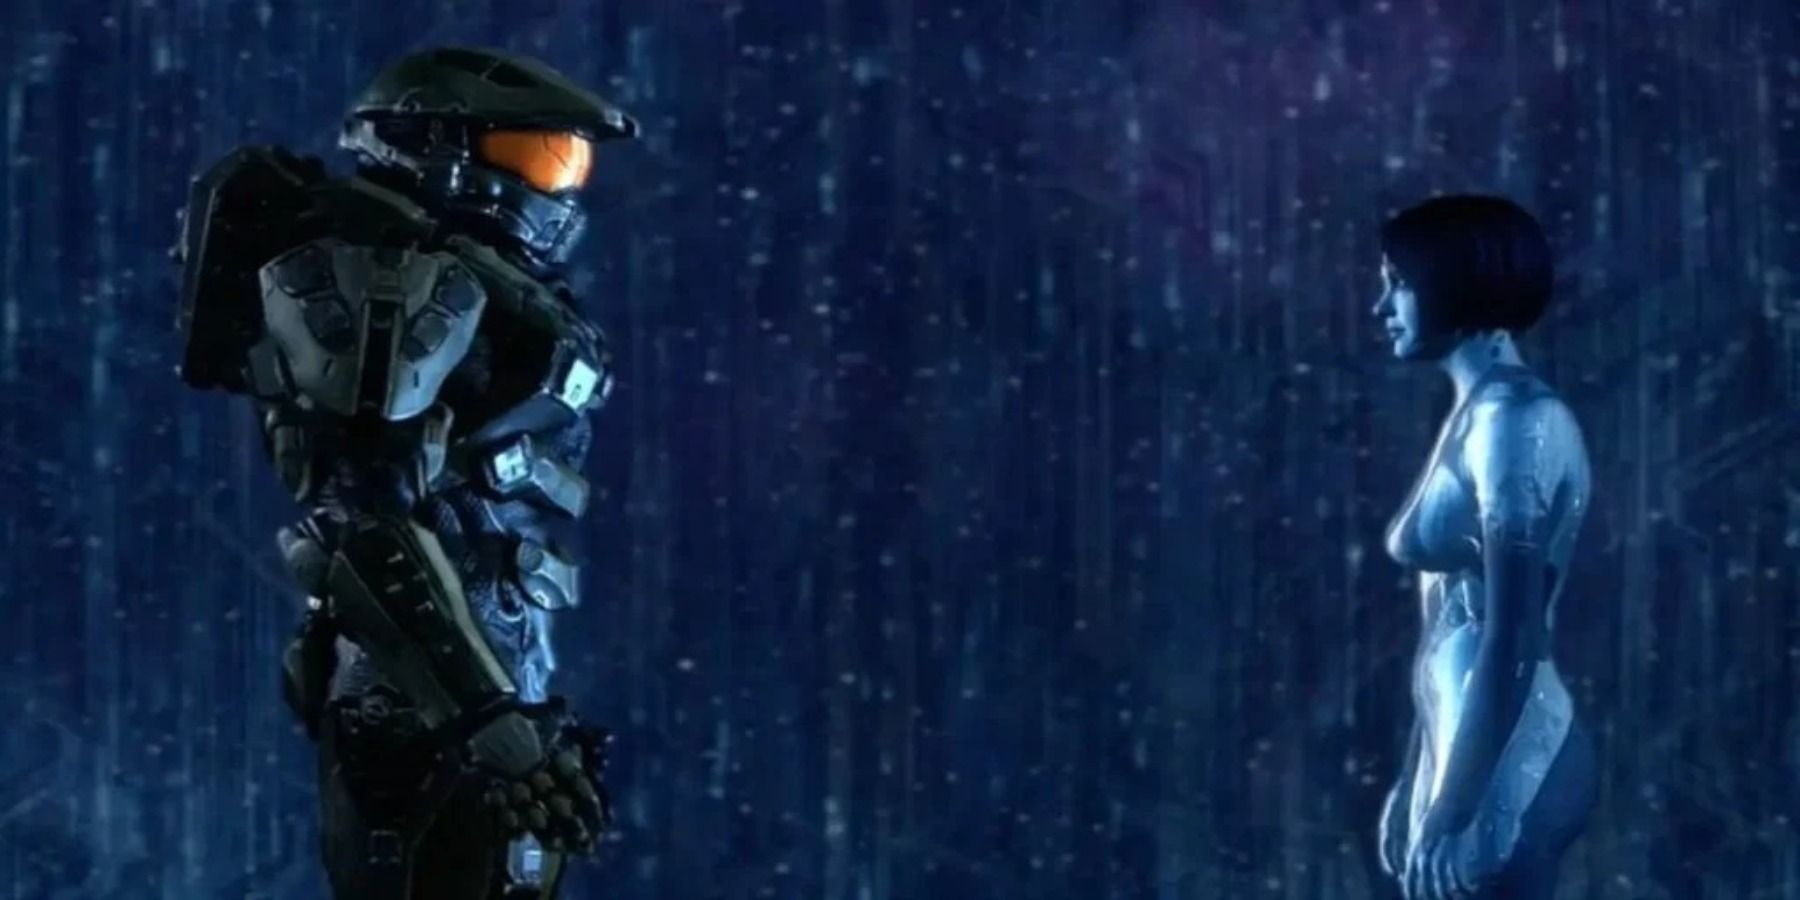 Halo Master Chief and Cortana